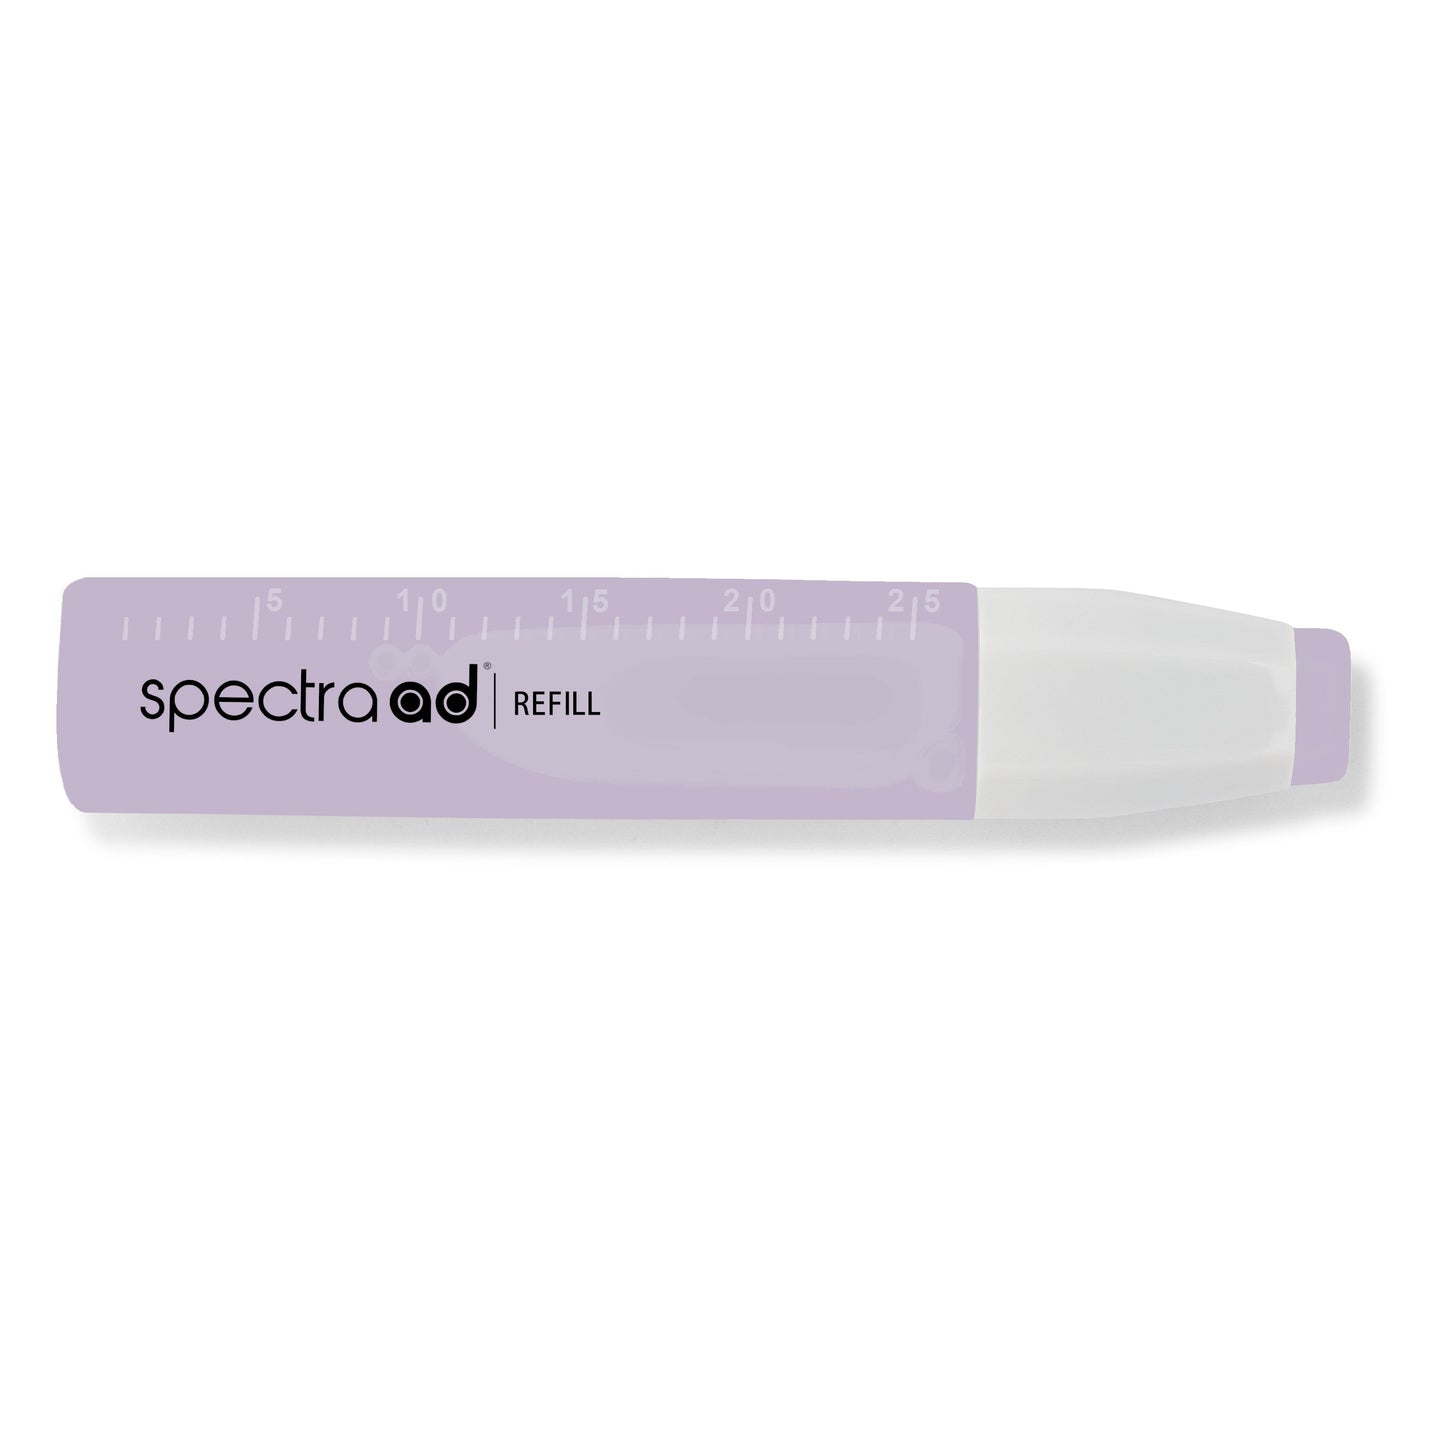 058 - Warm Gray 60% - Spectra AD Refill Bottle